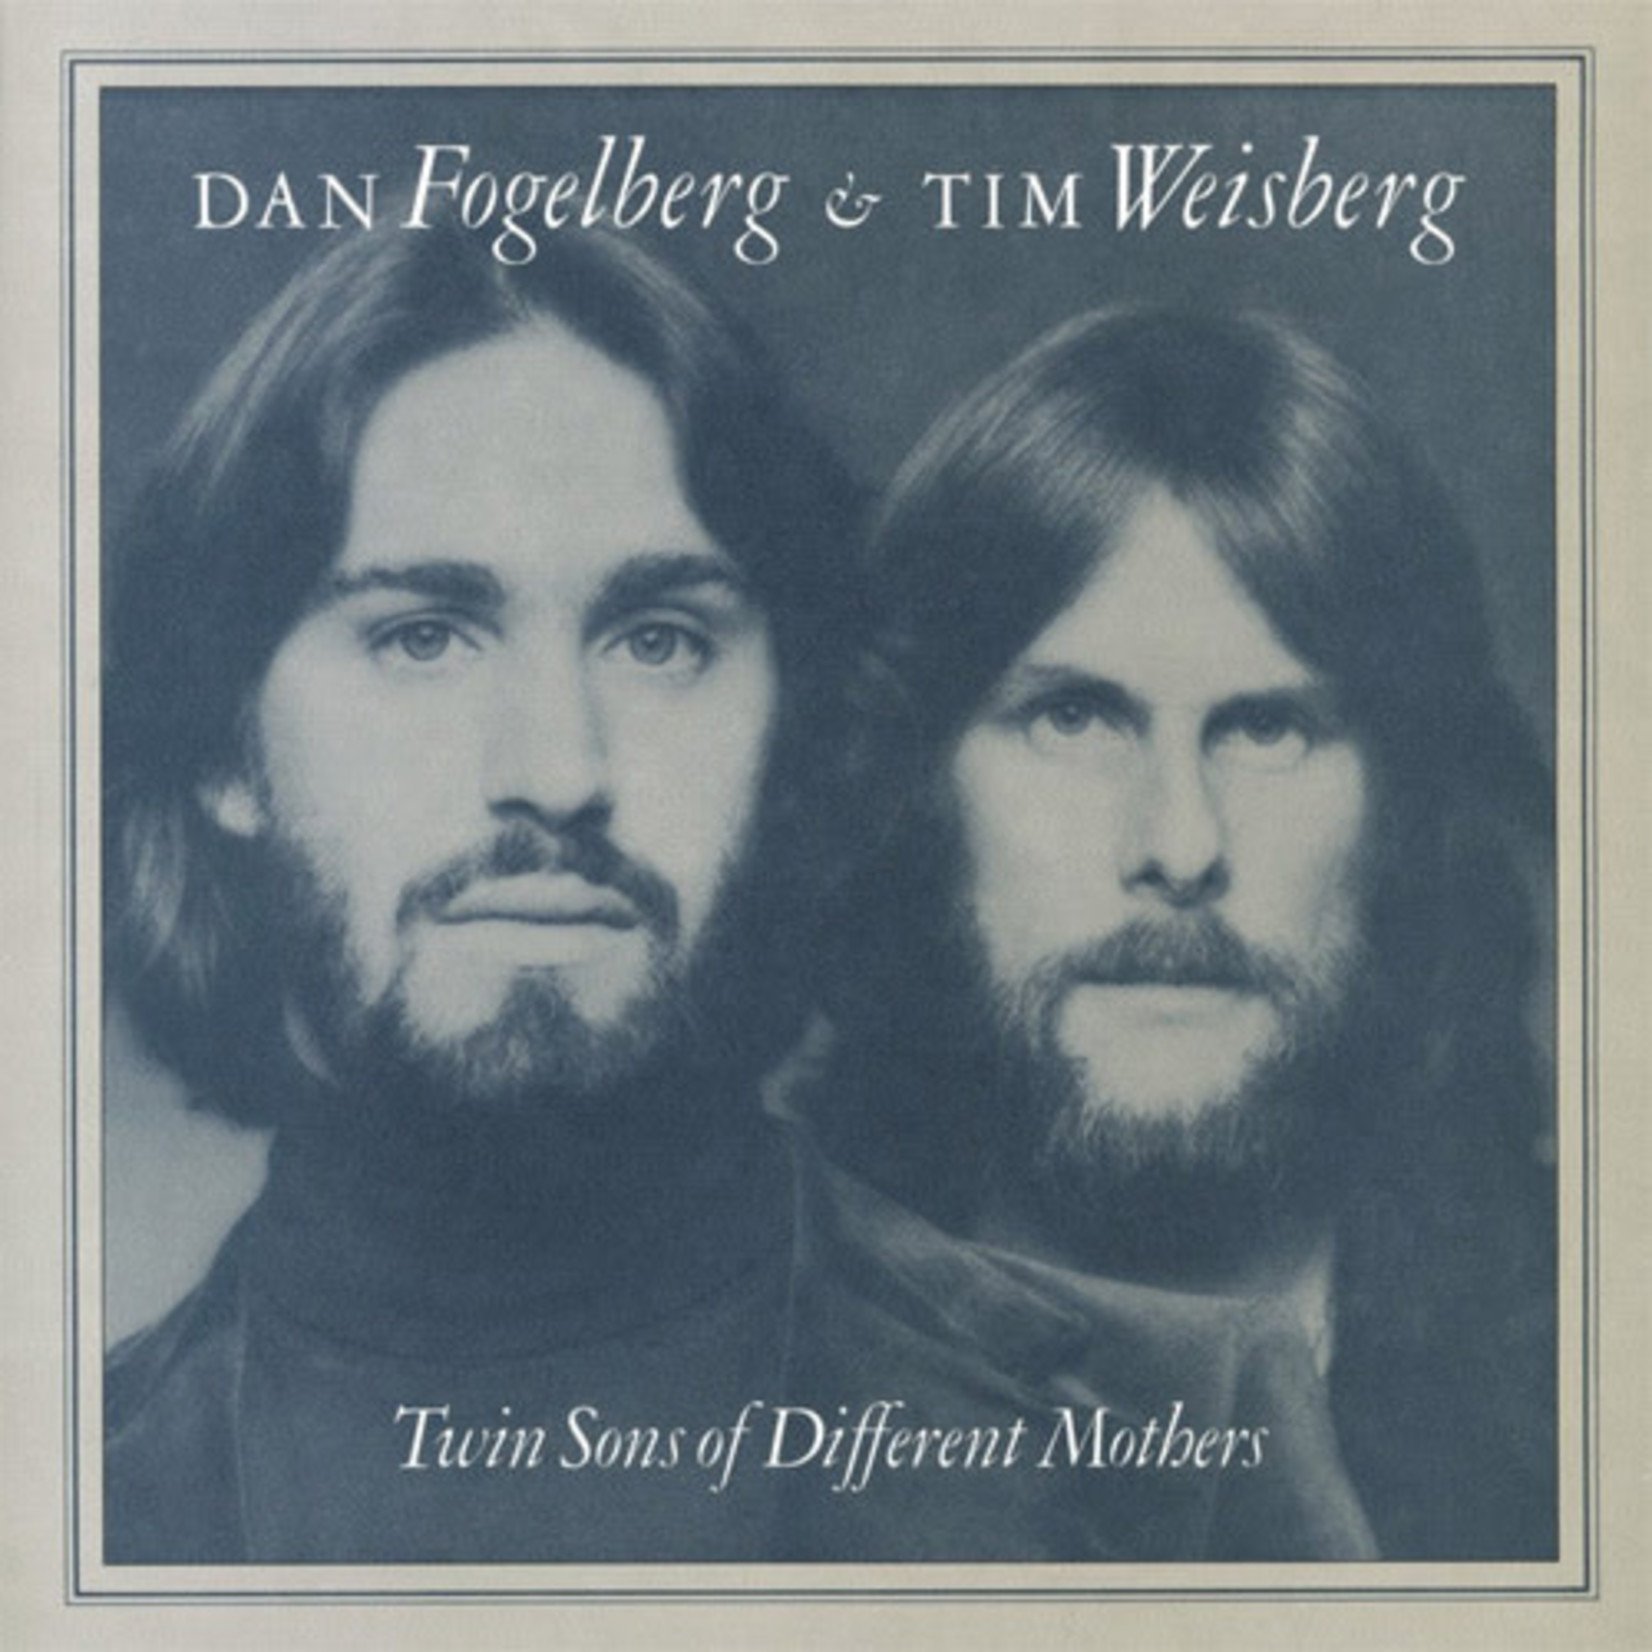 [Vintage] Dan Fogelberg & Tim Weisberg - Twin Sons of Different Mothers